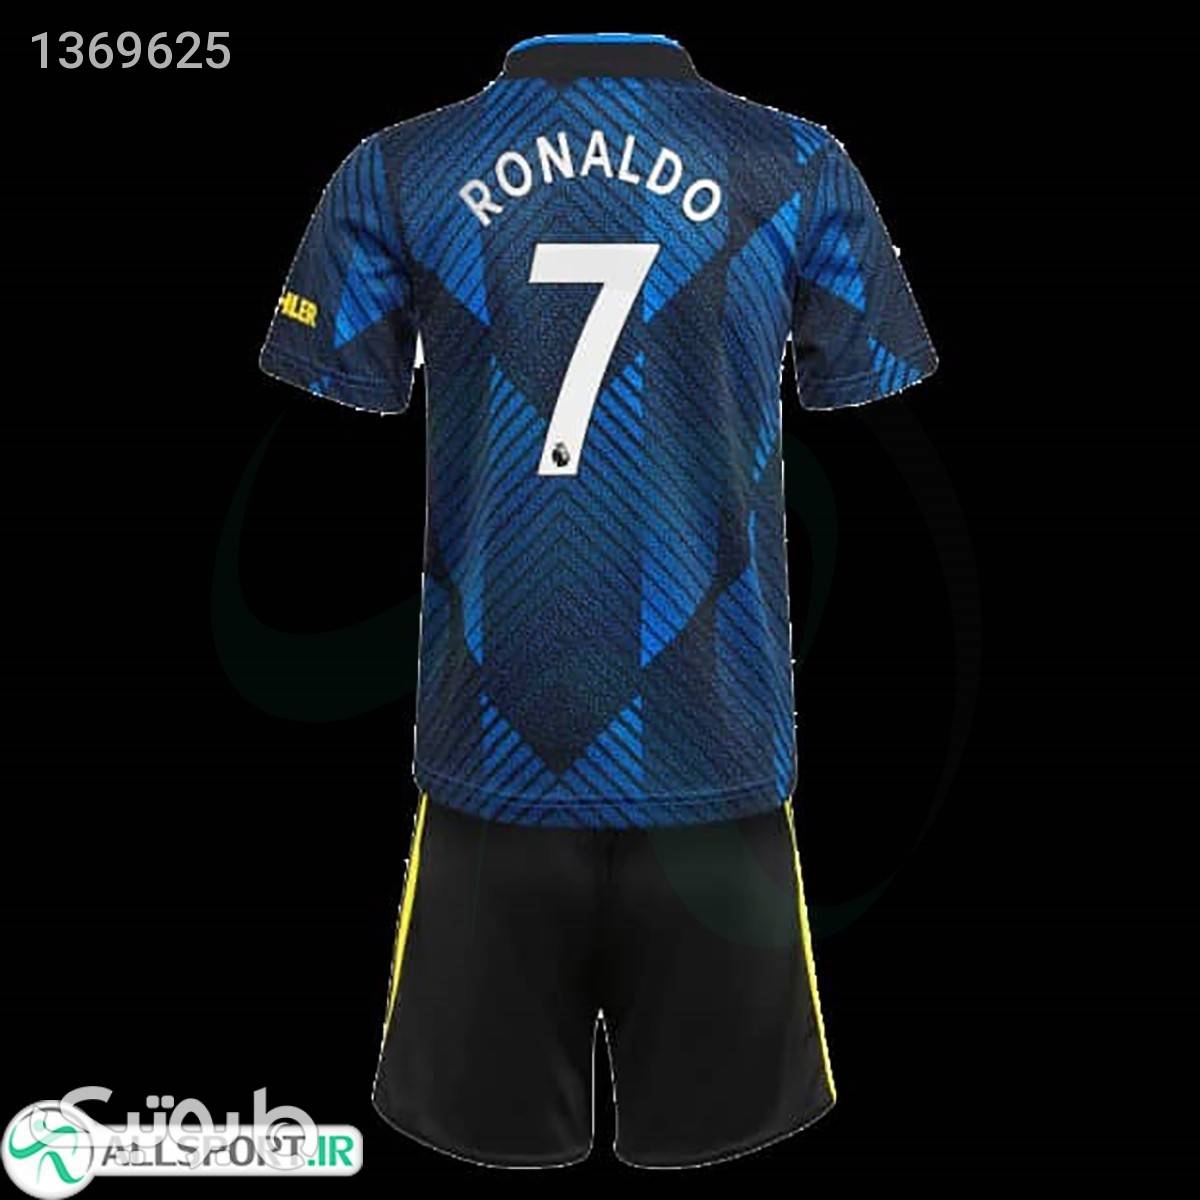 پیراهن شورت سوم منچستریونایتد با چاپ نام و شماره رونالدو Manchester United 202021 Third Soccer Jersey Kit ShirtShort Ronaldo 7